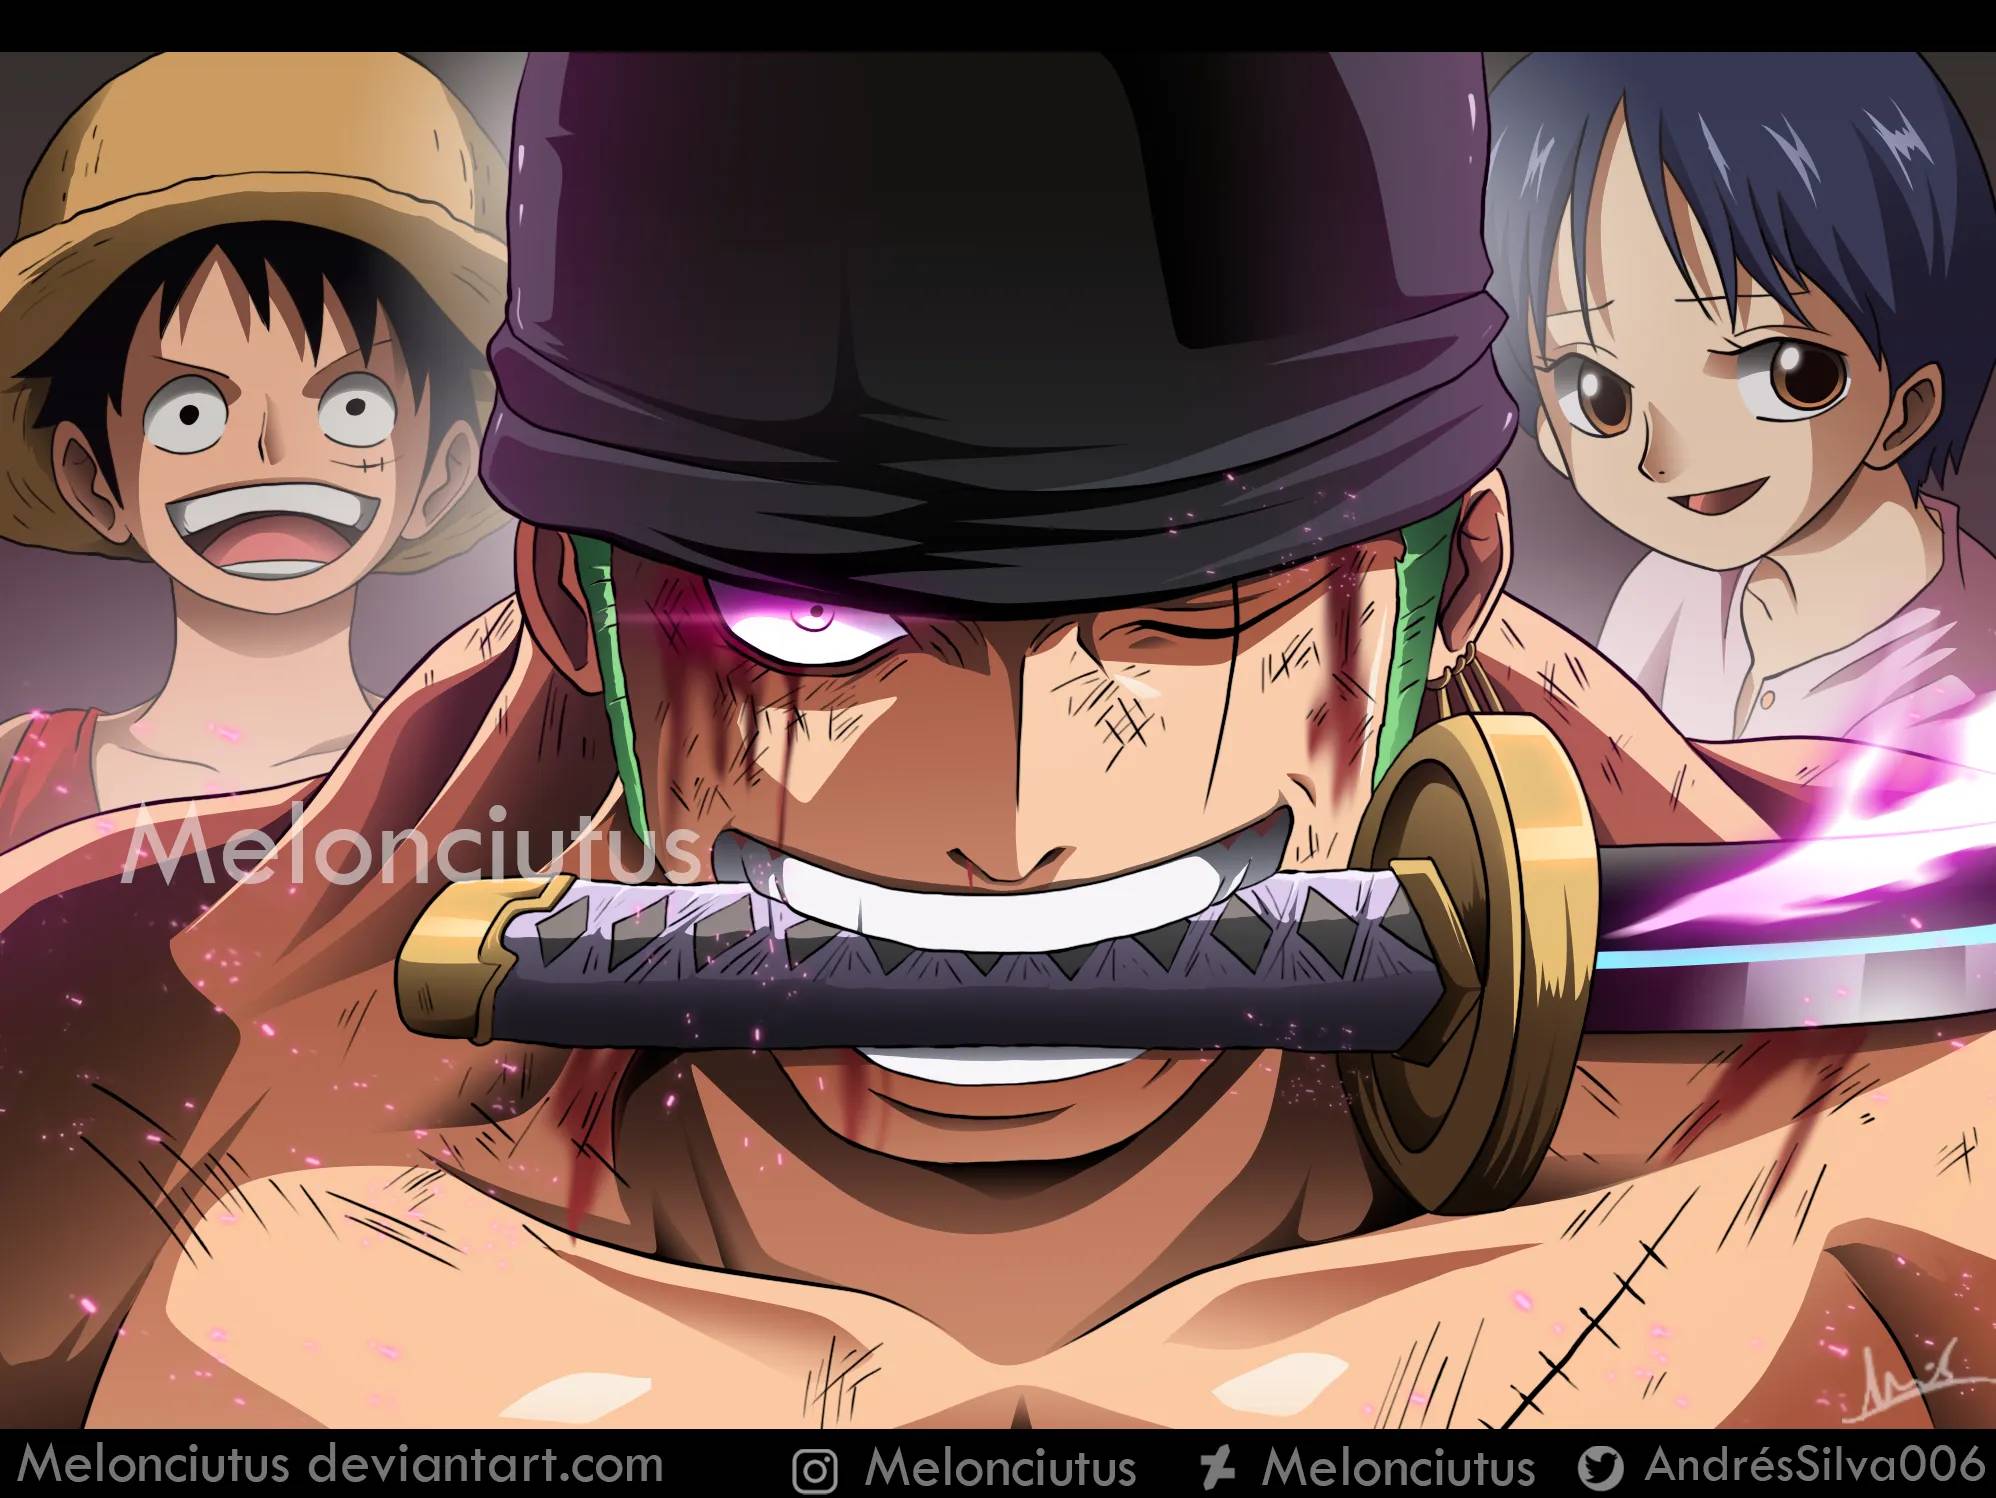 One Piece 997 - Roronoa Zoro by Melonciutus on DeviantArt